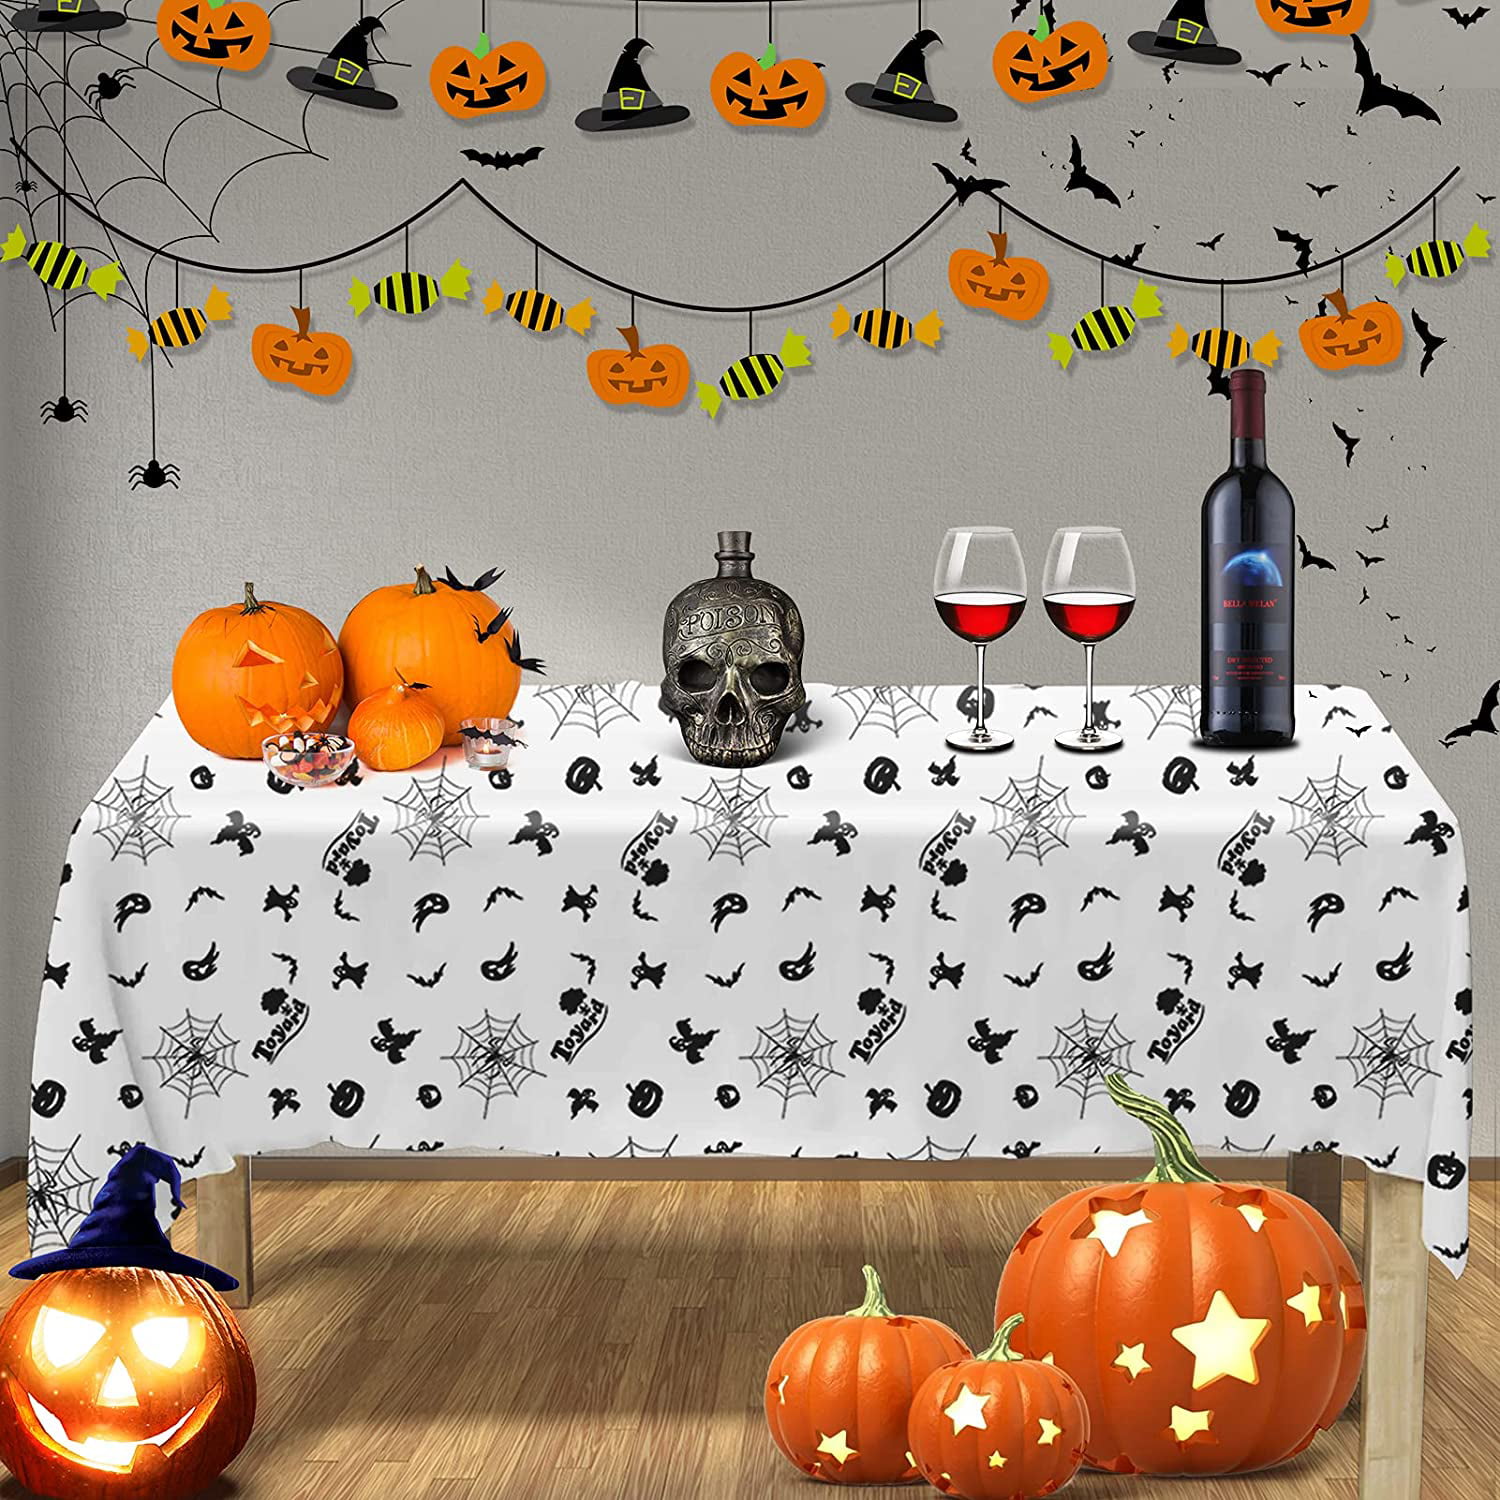 1 Set Halloween Table Skirt Tablecloth Decoration Table Skirt with Pumpkin Bat Stars Banners Halloween Party Decorations Orange Black